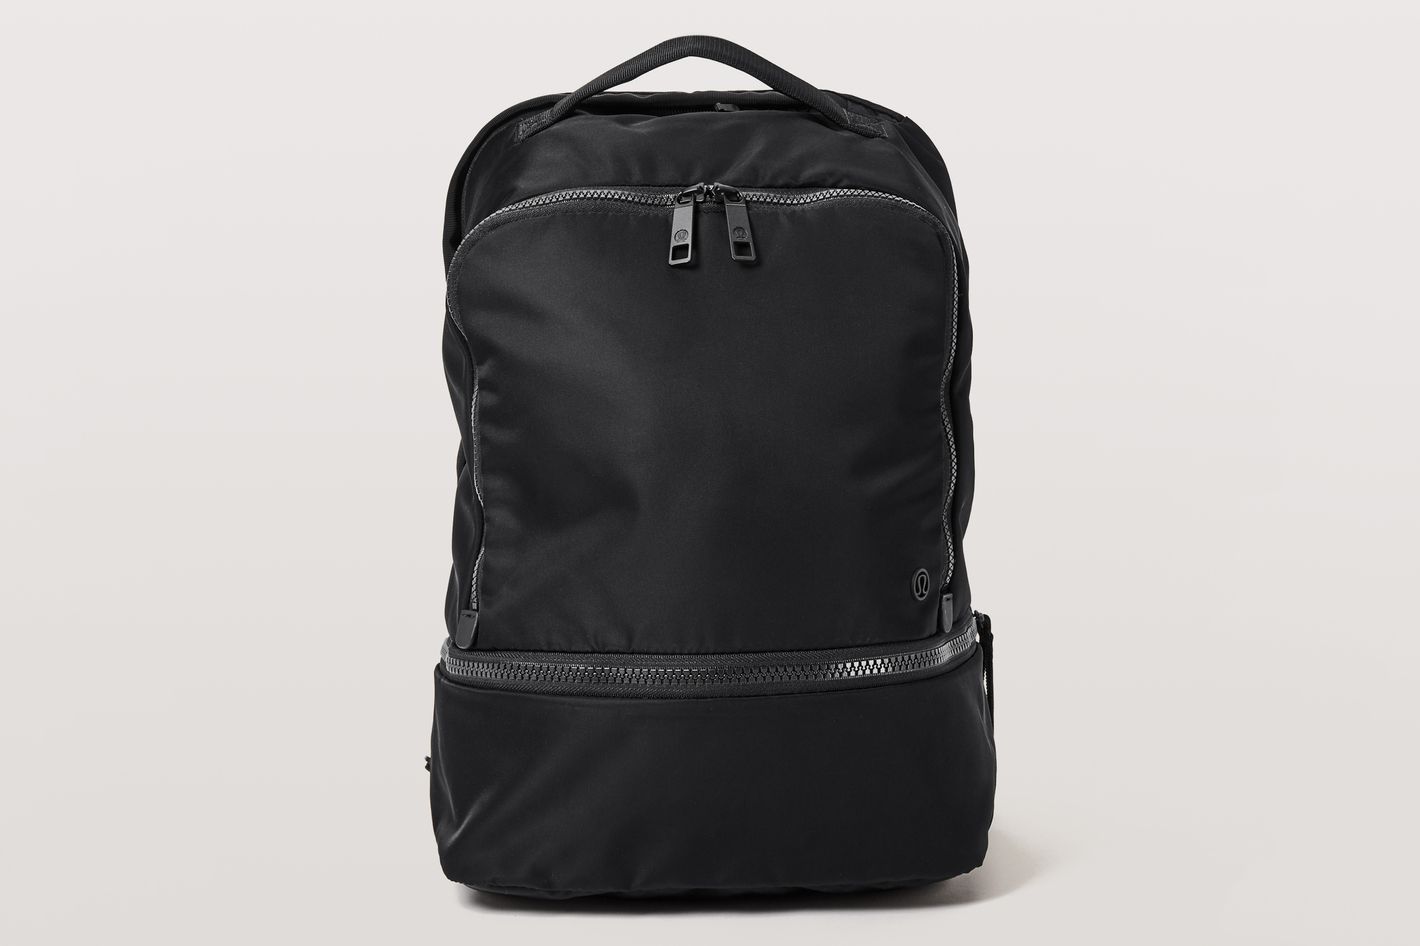 The City Adventurer Backpack